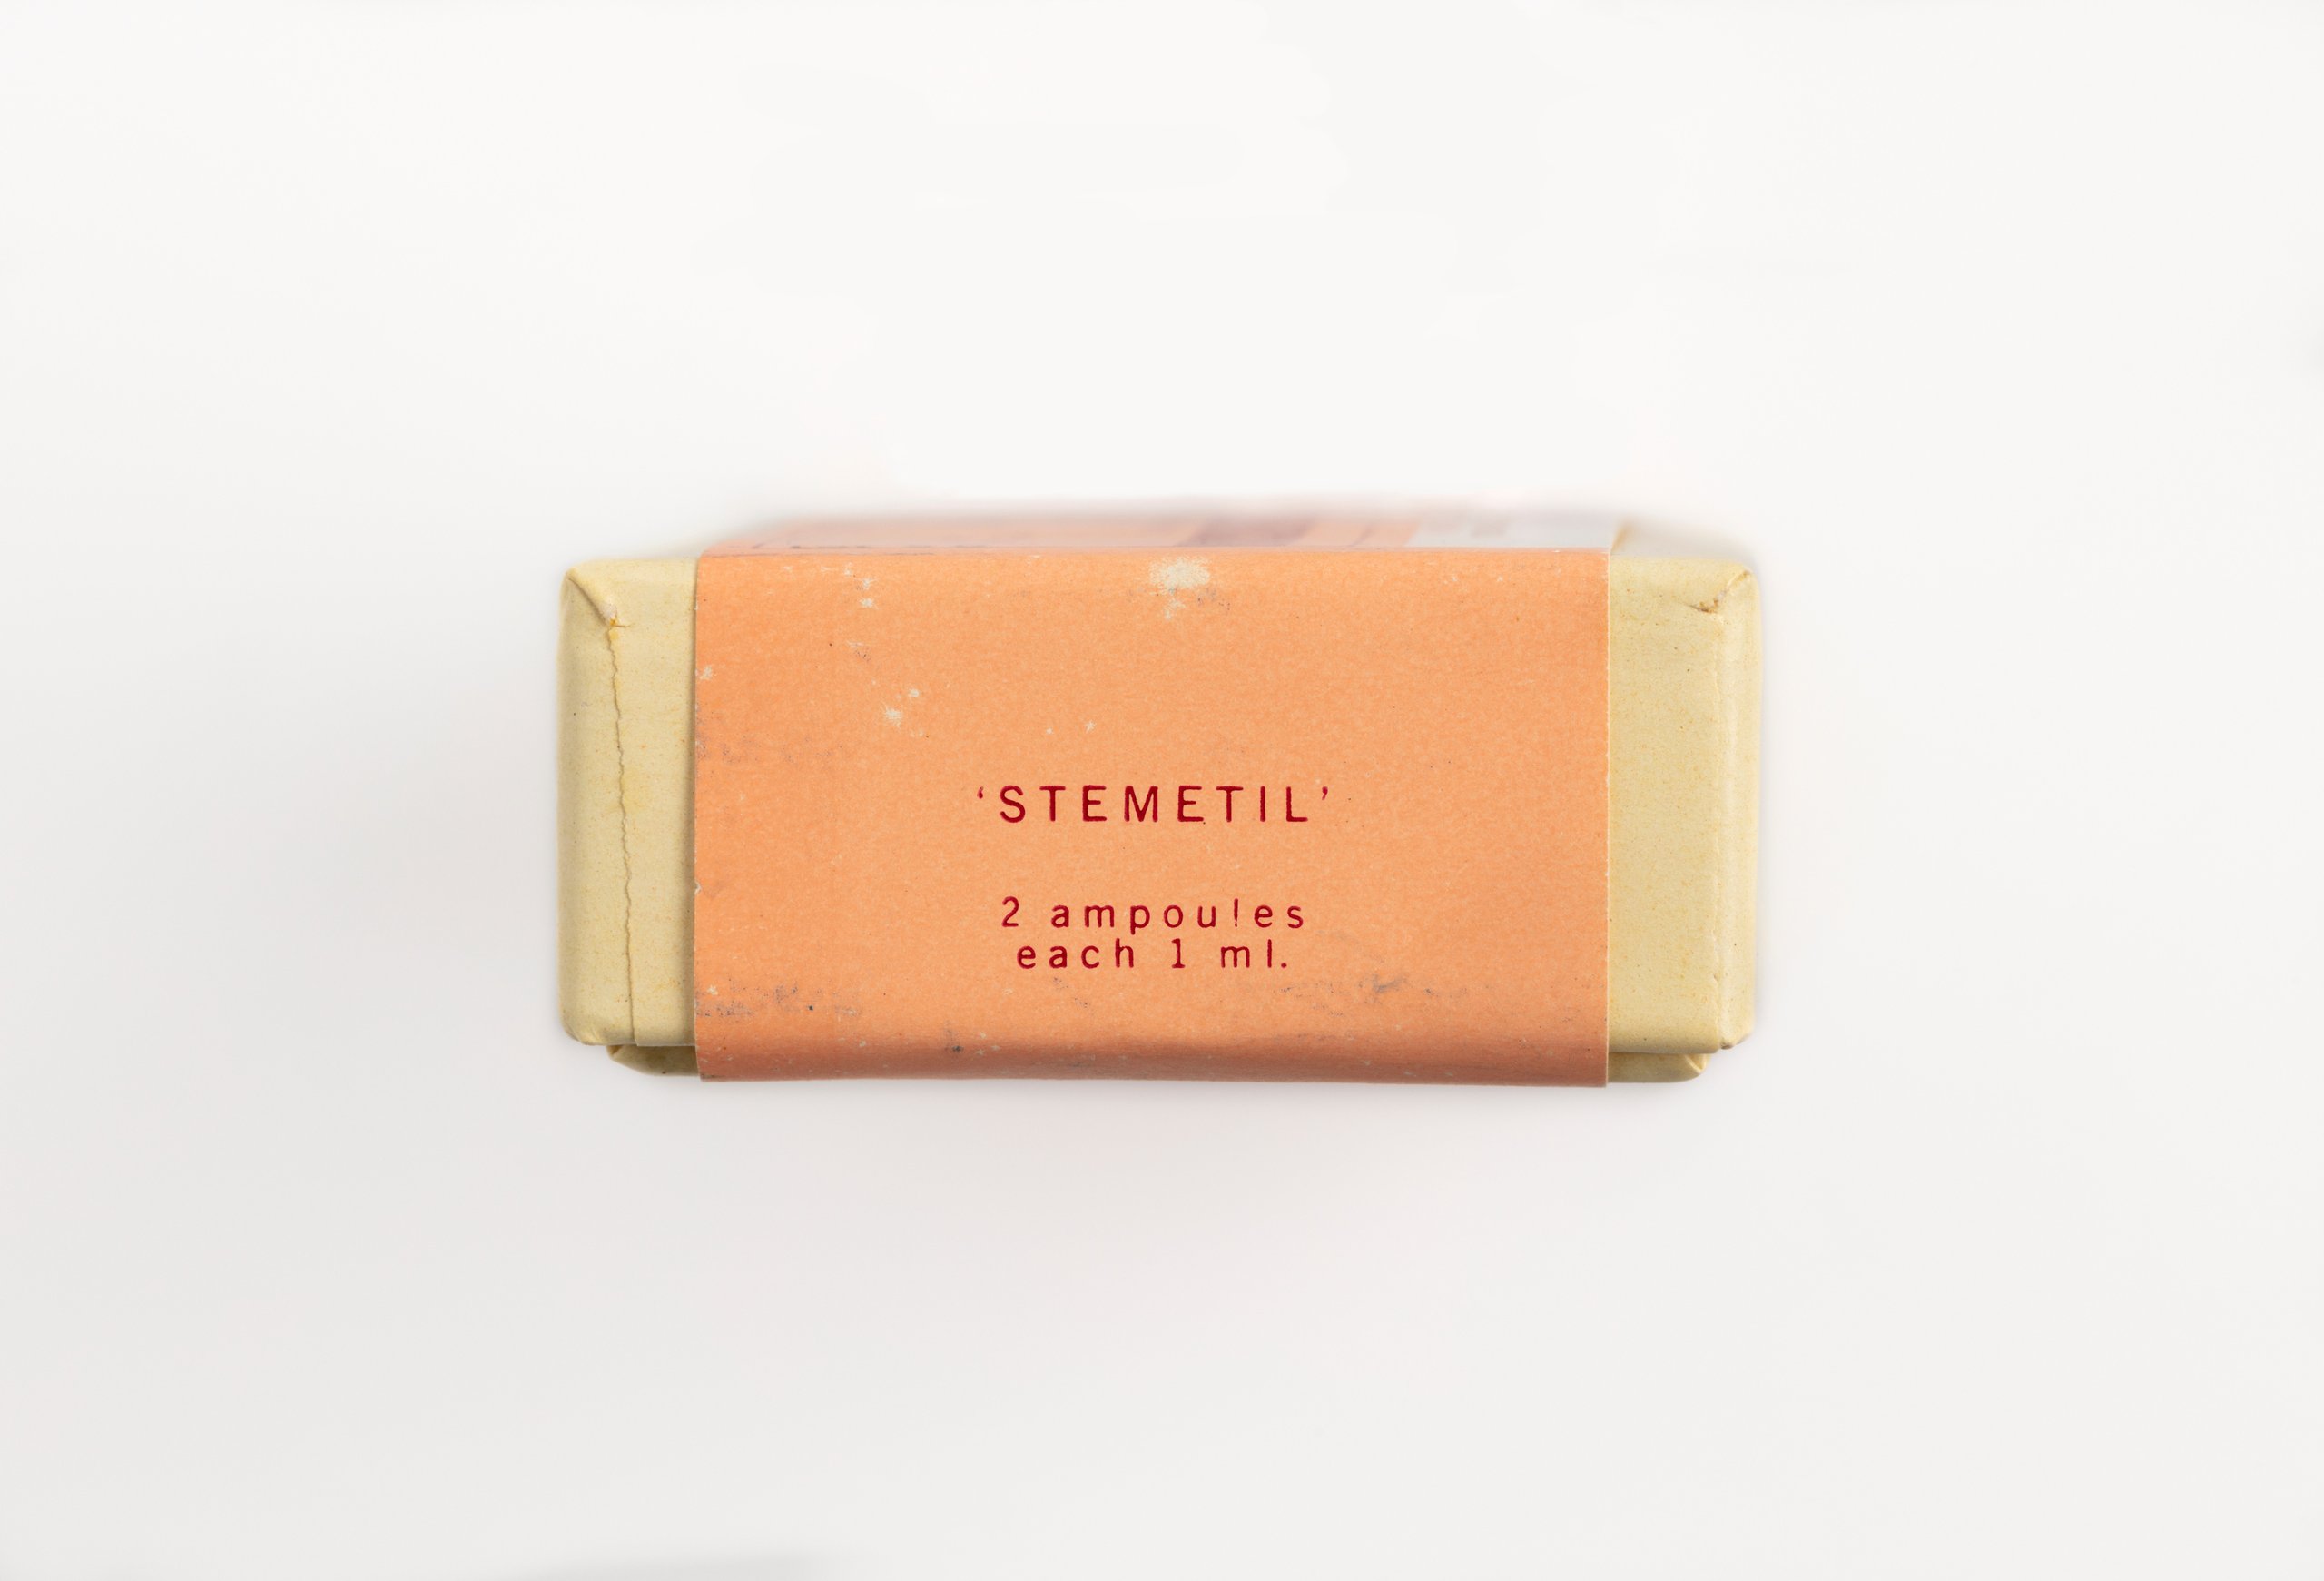 Empty 'Stemetil' medicine box with information sheet